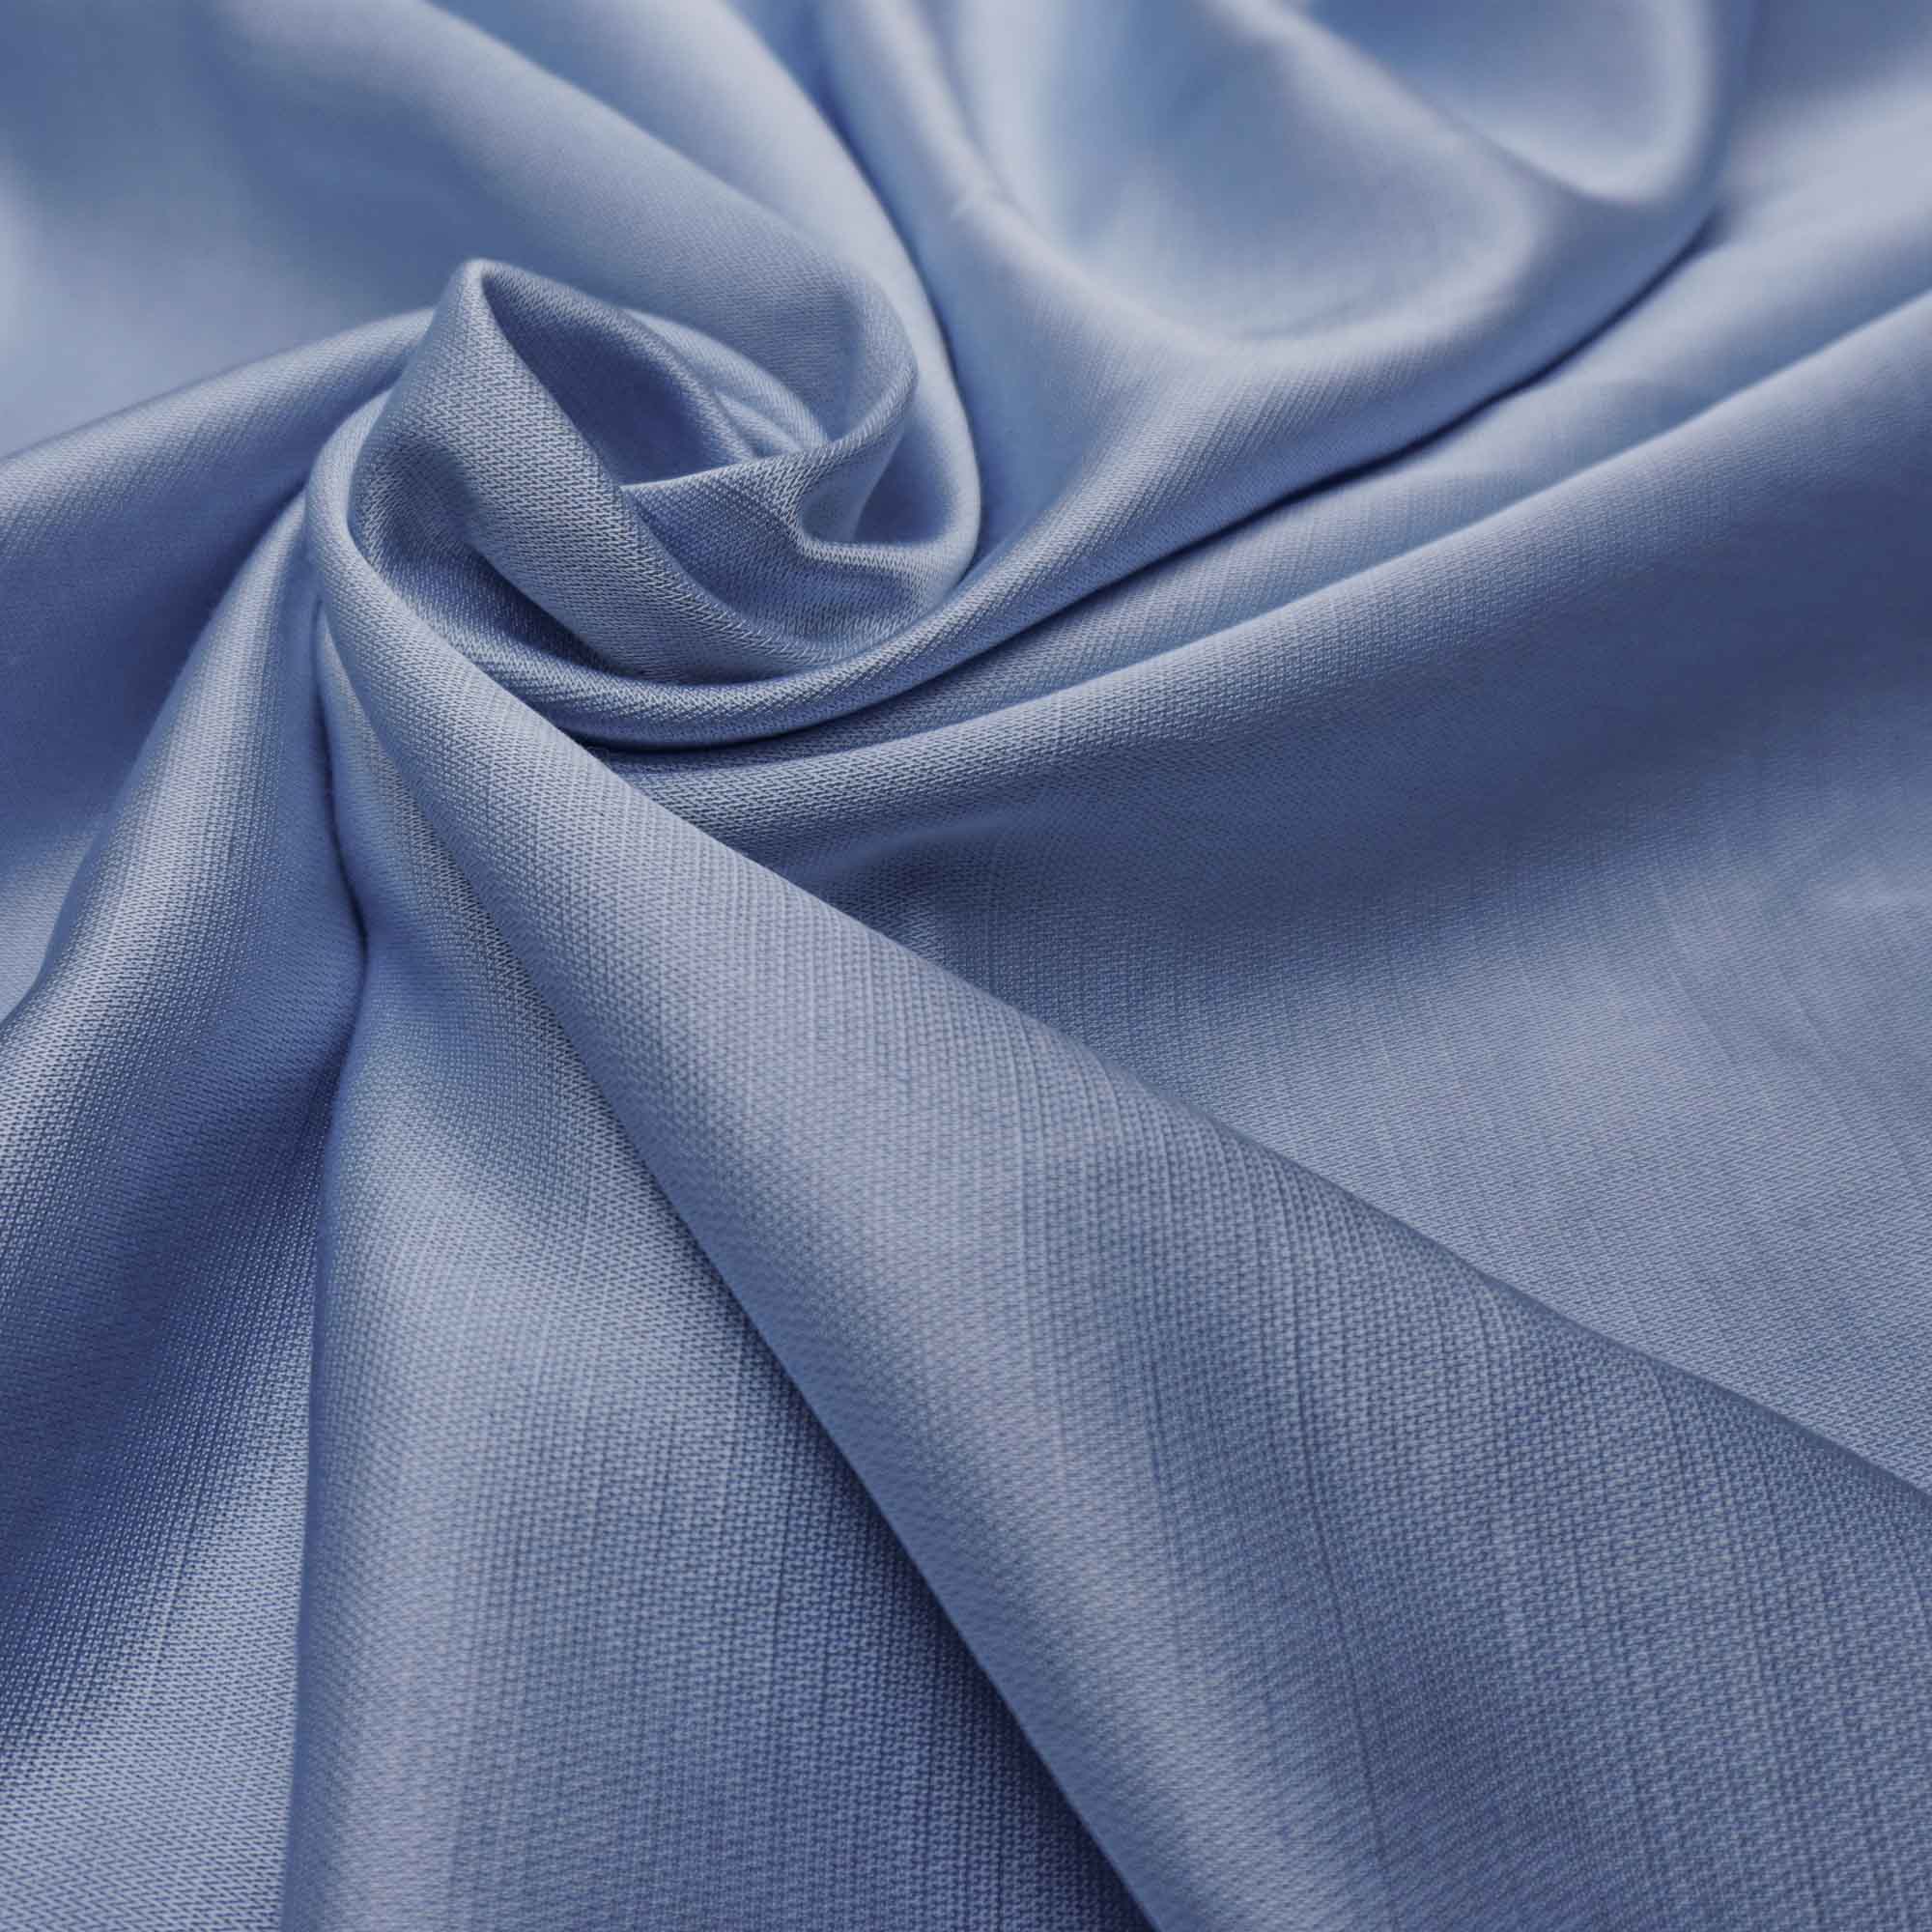 Tecido linho misto changeant azul serenity (tecido italiano legítimo)